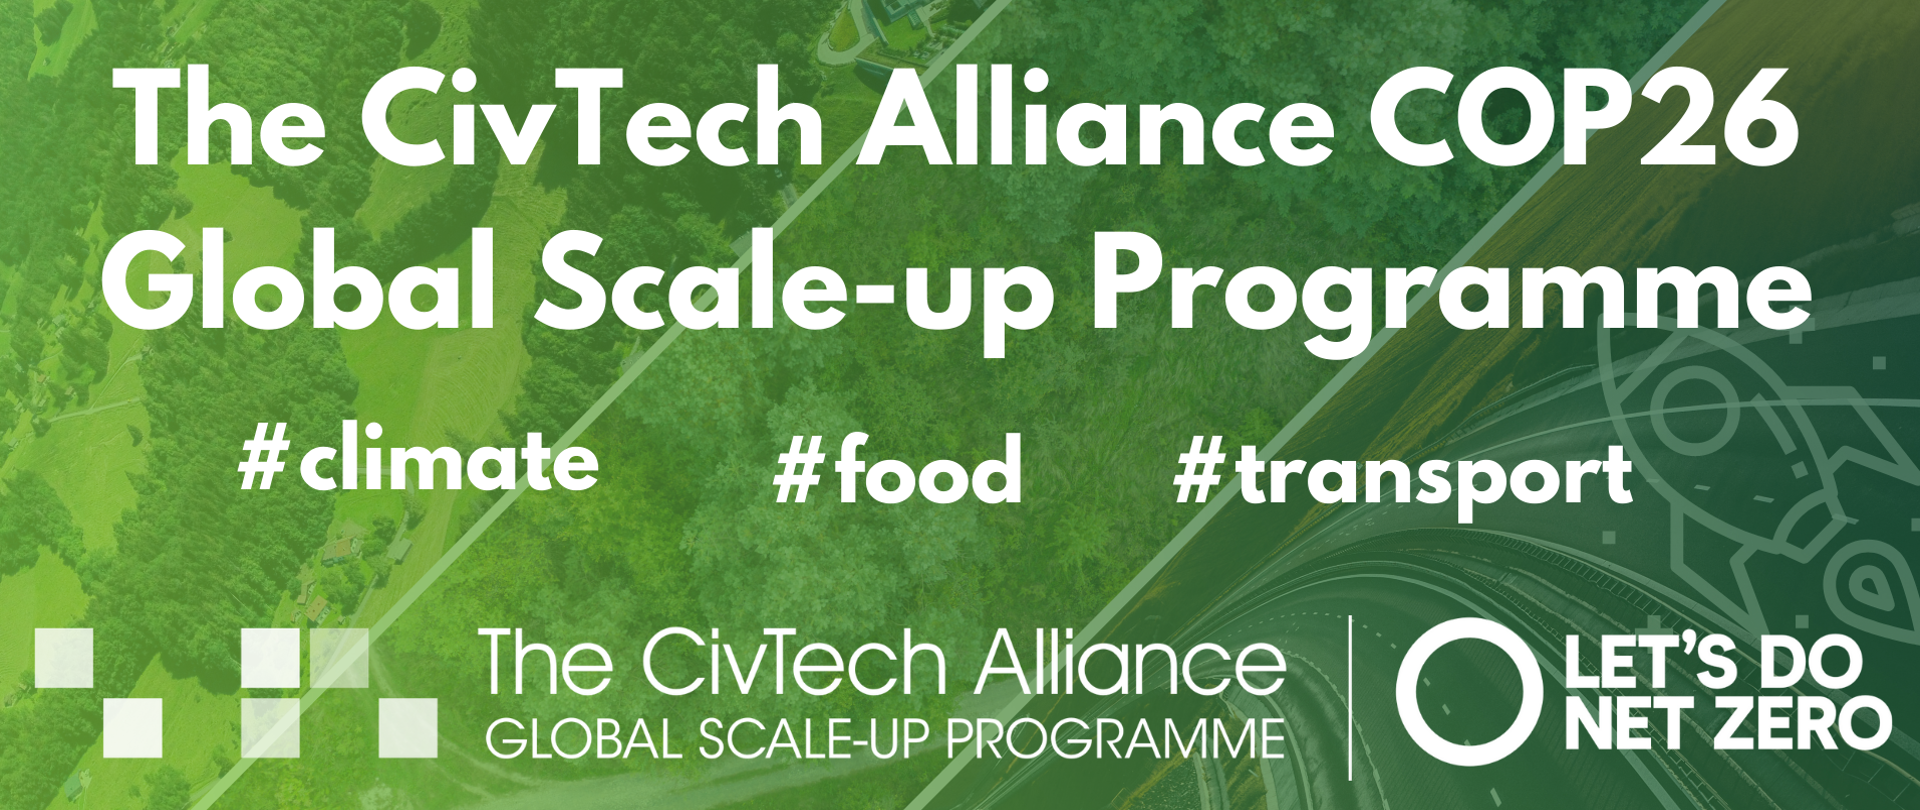 Graphic inscription:
The CivTech Alliance COP26 Global Scale-up Programme #climat #food #transport